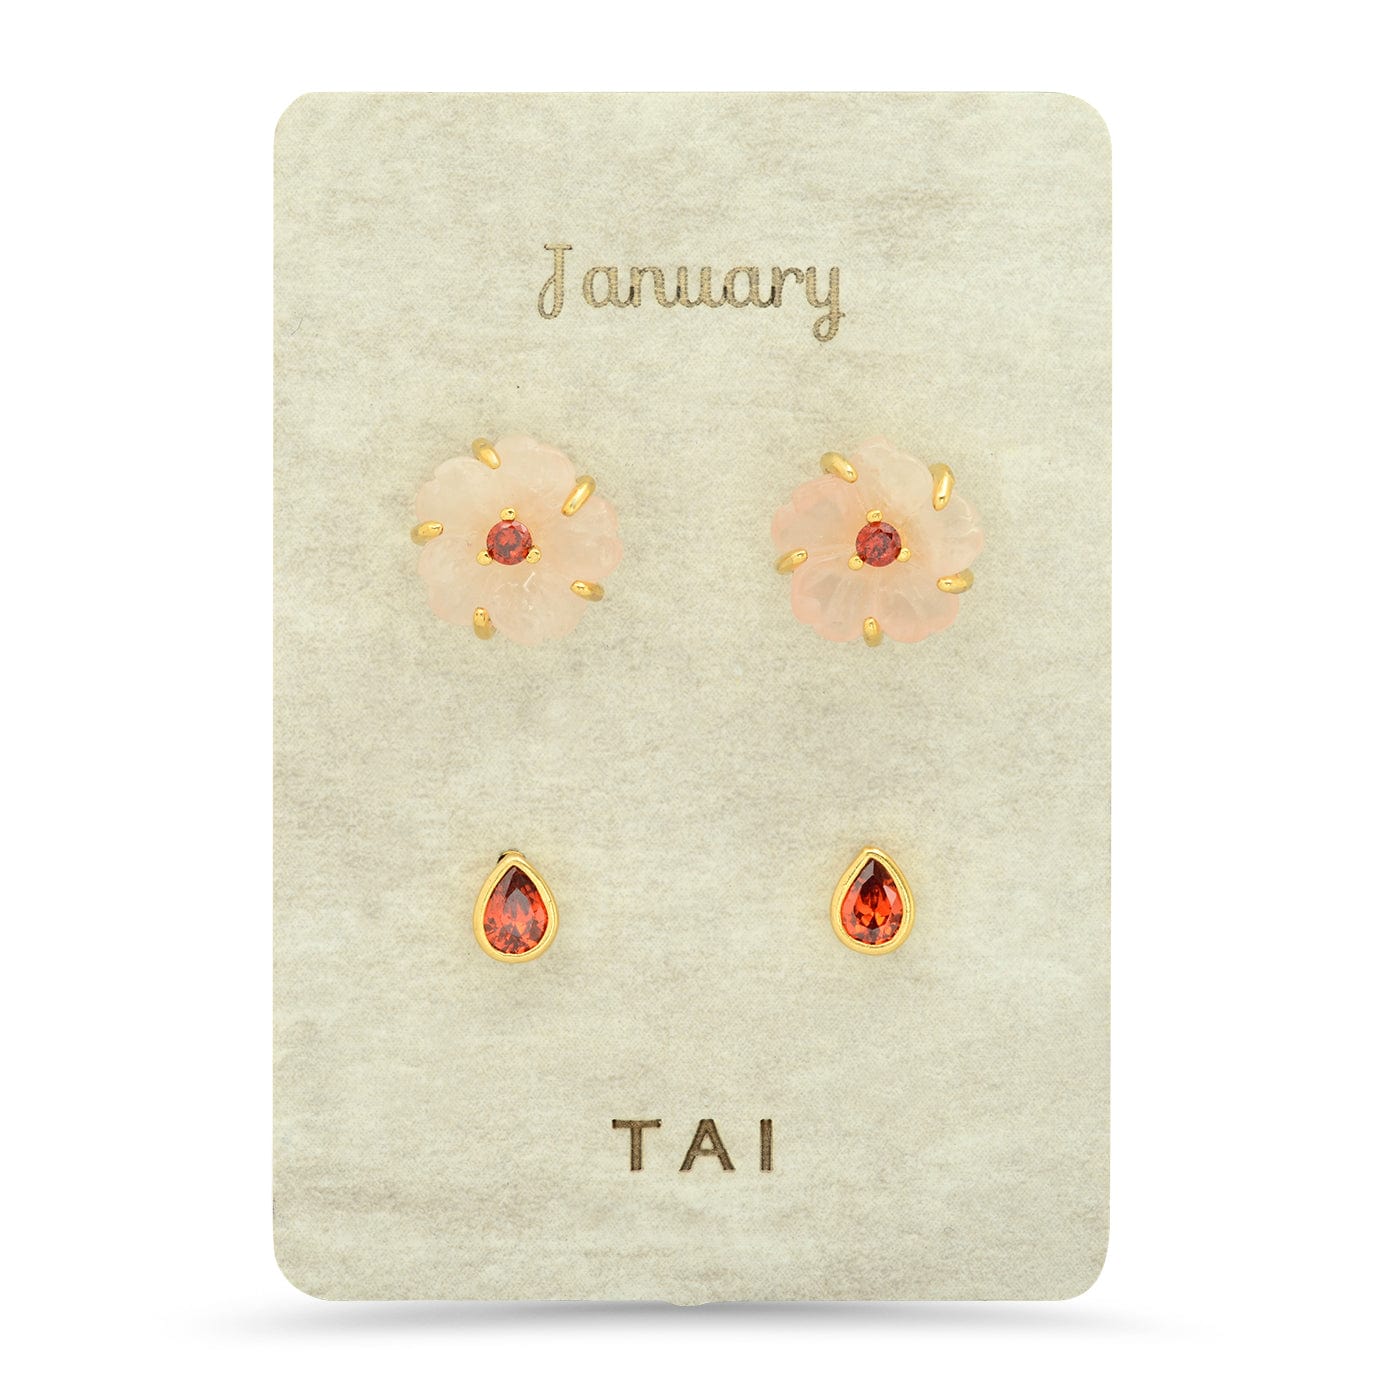 TAI JEWELRY Earrings January Rose Quartz Birthstone Earring Set